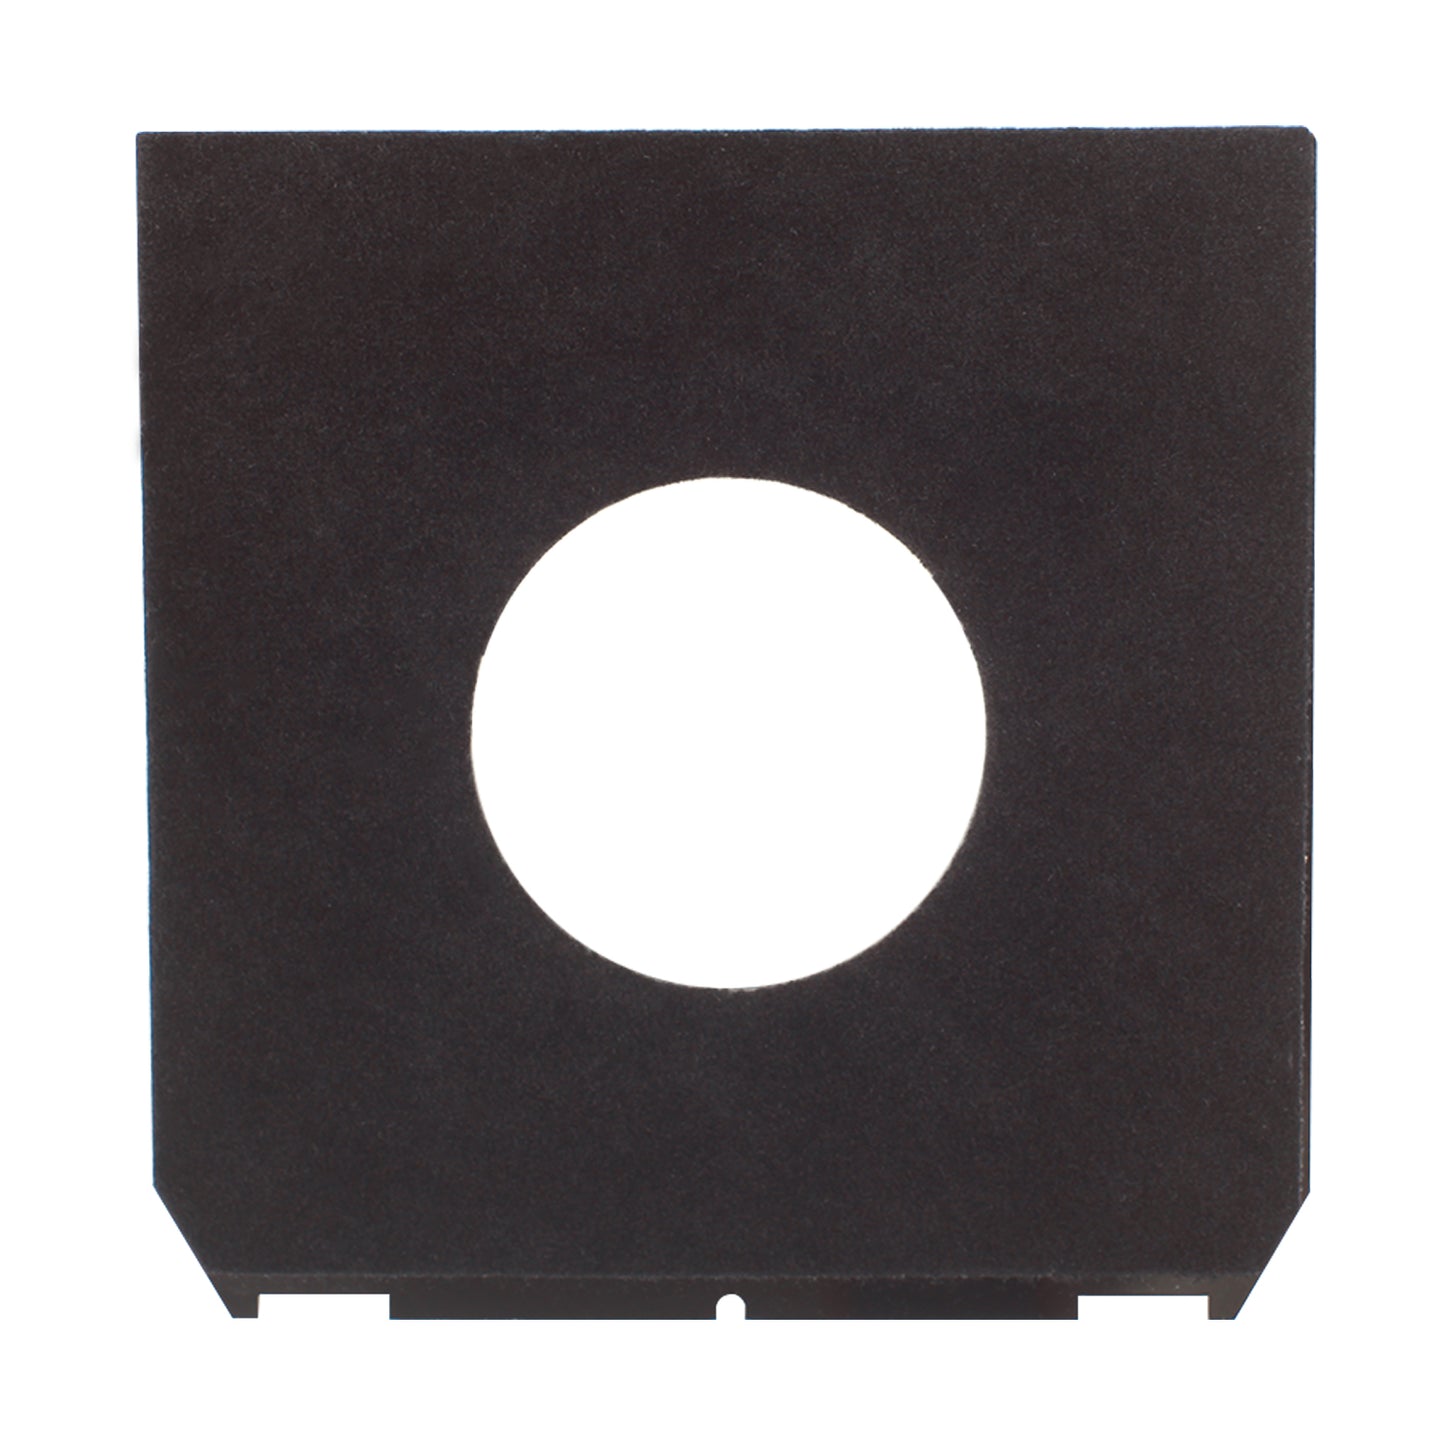 Plastic Compur Prontor Copal #1 Shutter Lens board 41.6mm Linhof Style For 4x5" Large Format Camera Lenses